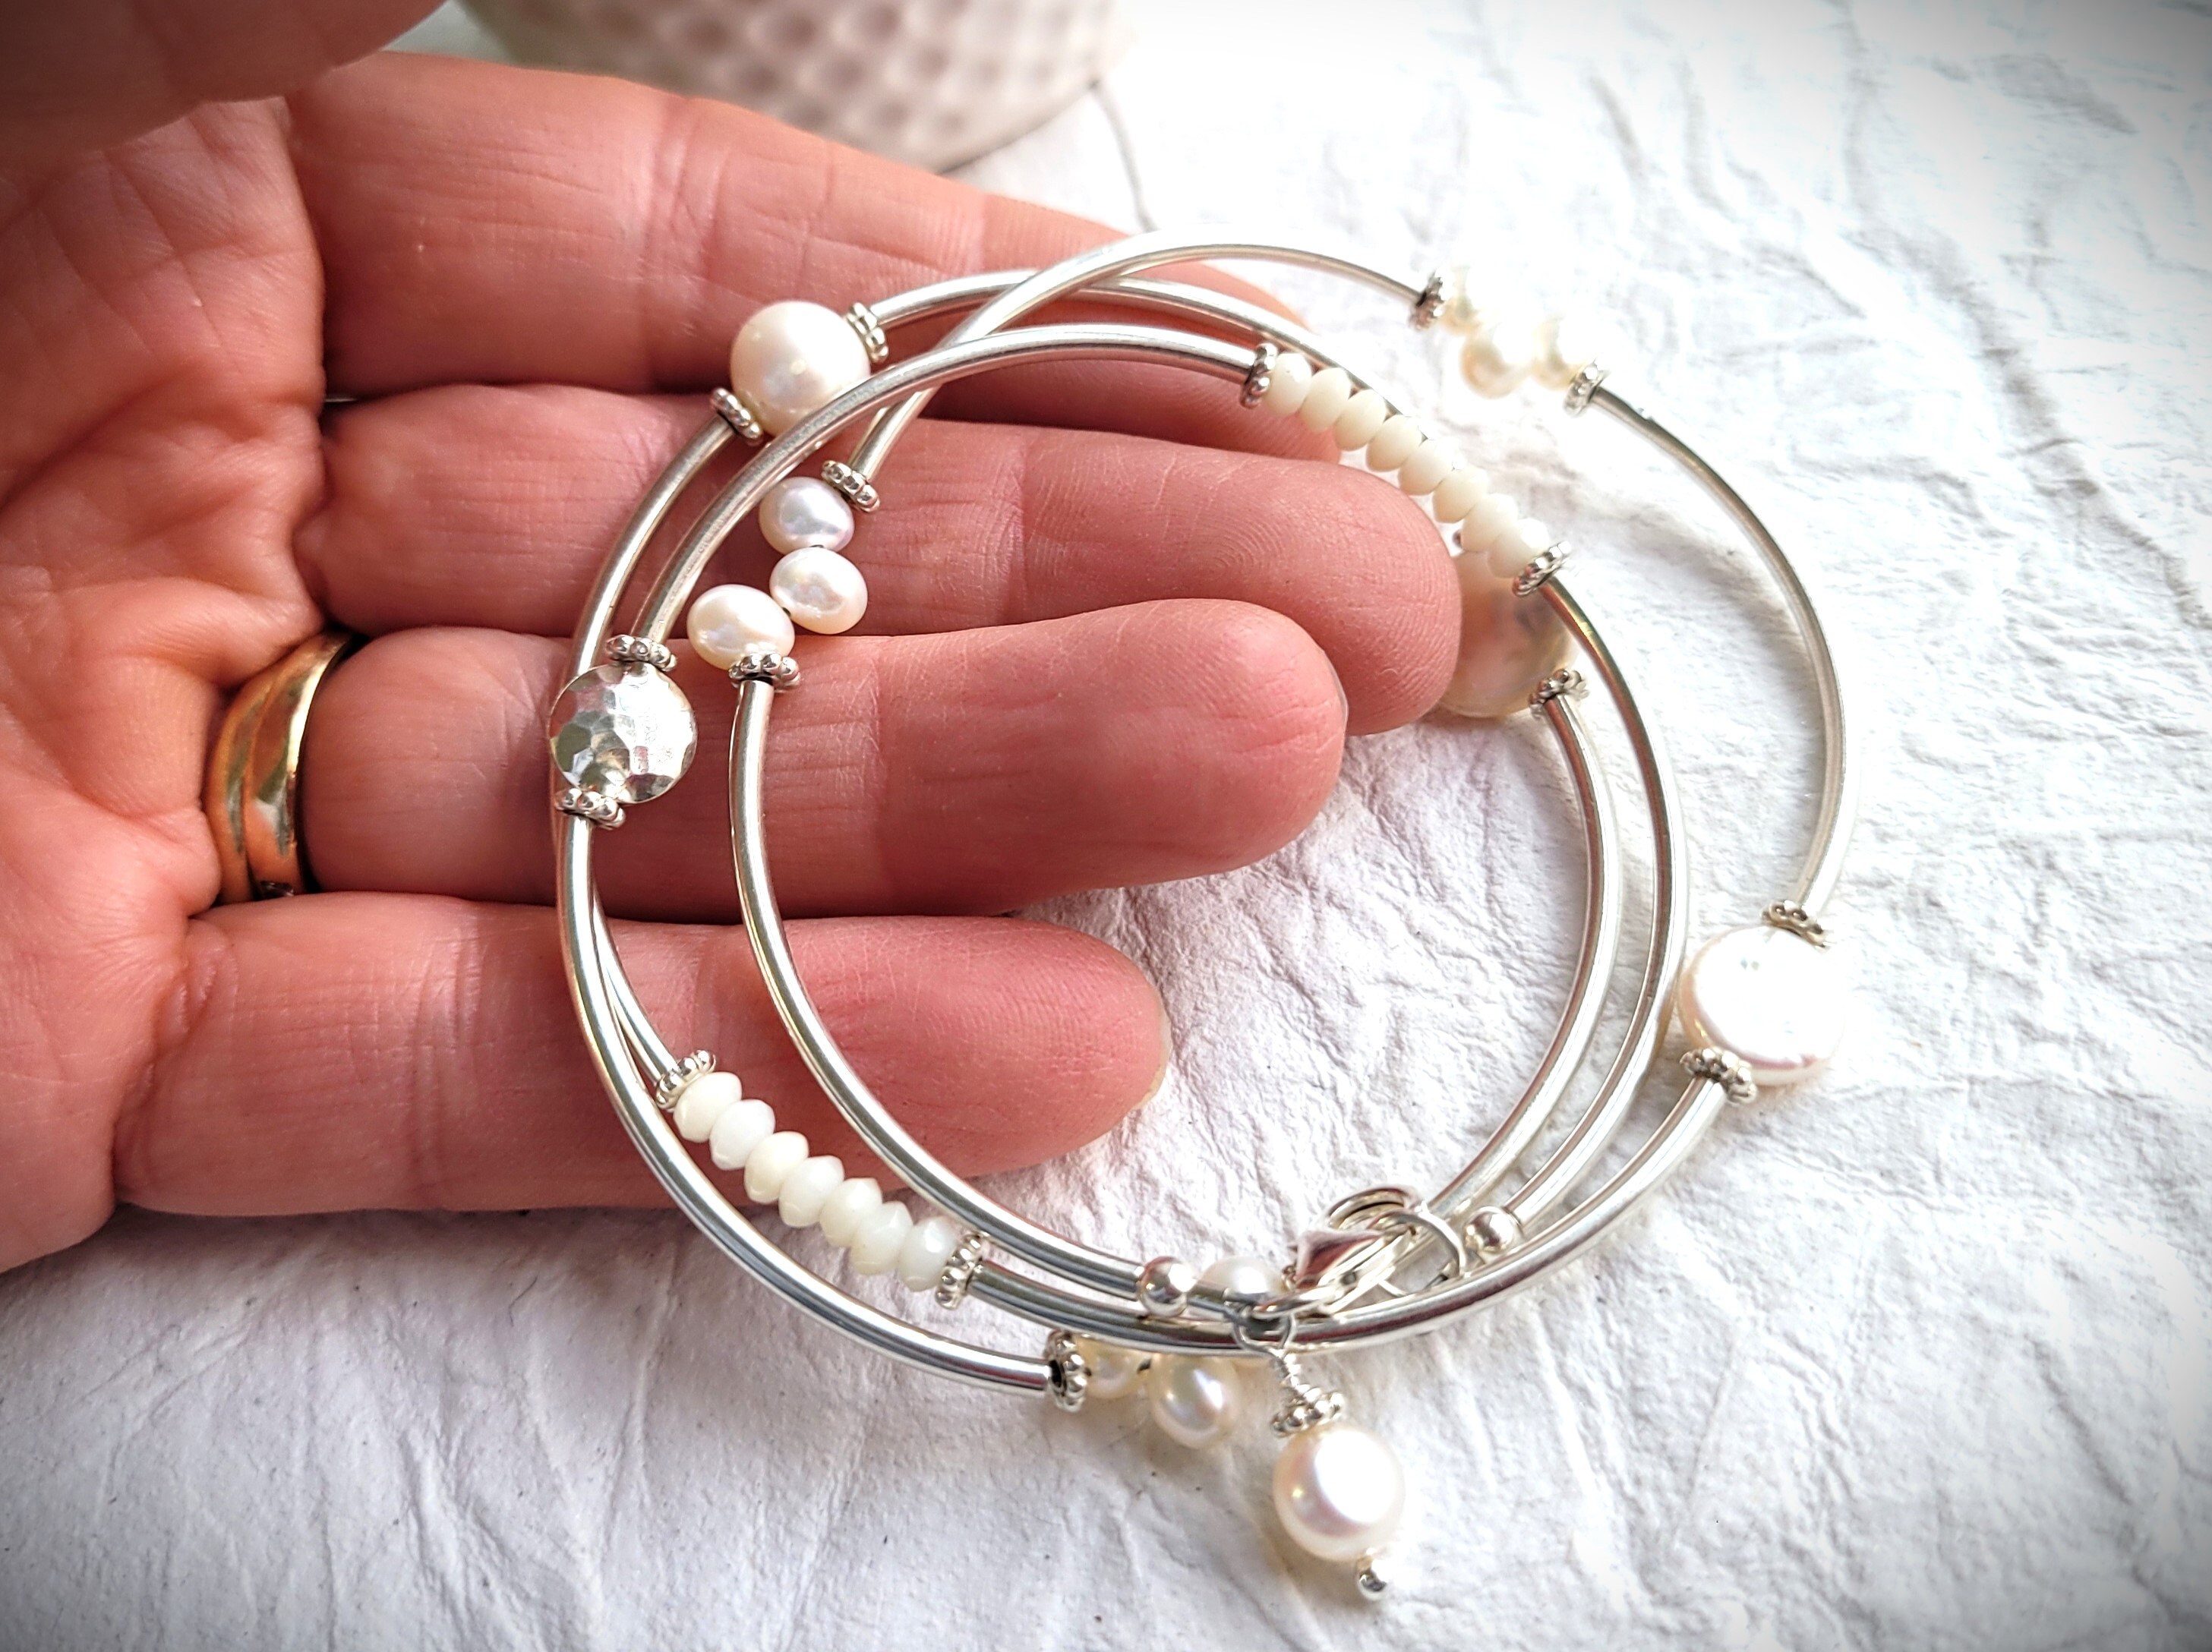 Real Pearl 5 Multi-Strand Bracelet  AAA 5.5-6 mm Cultured Freshwater –  Bourdage Pearls